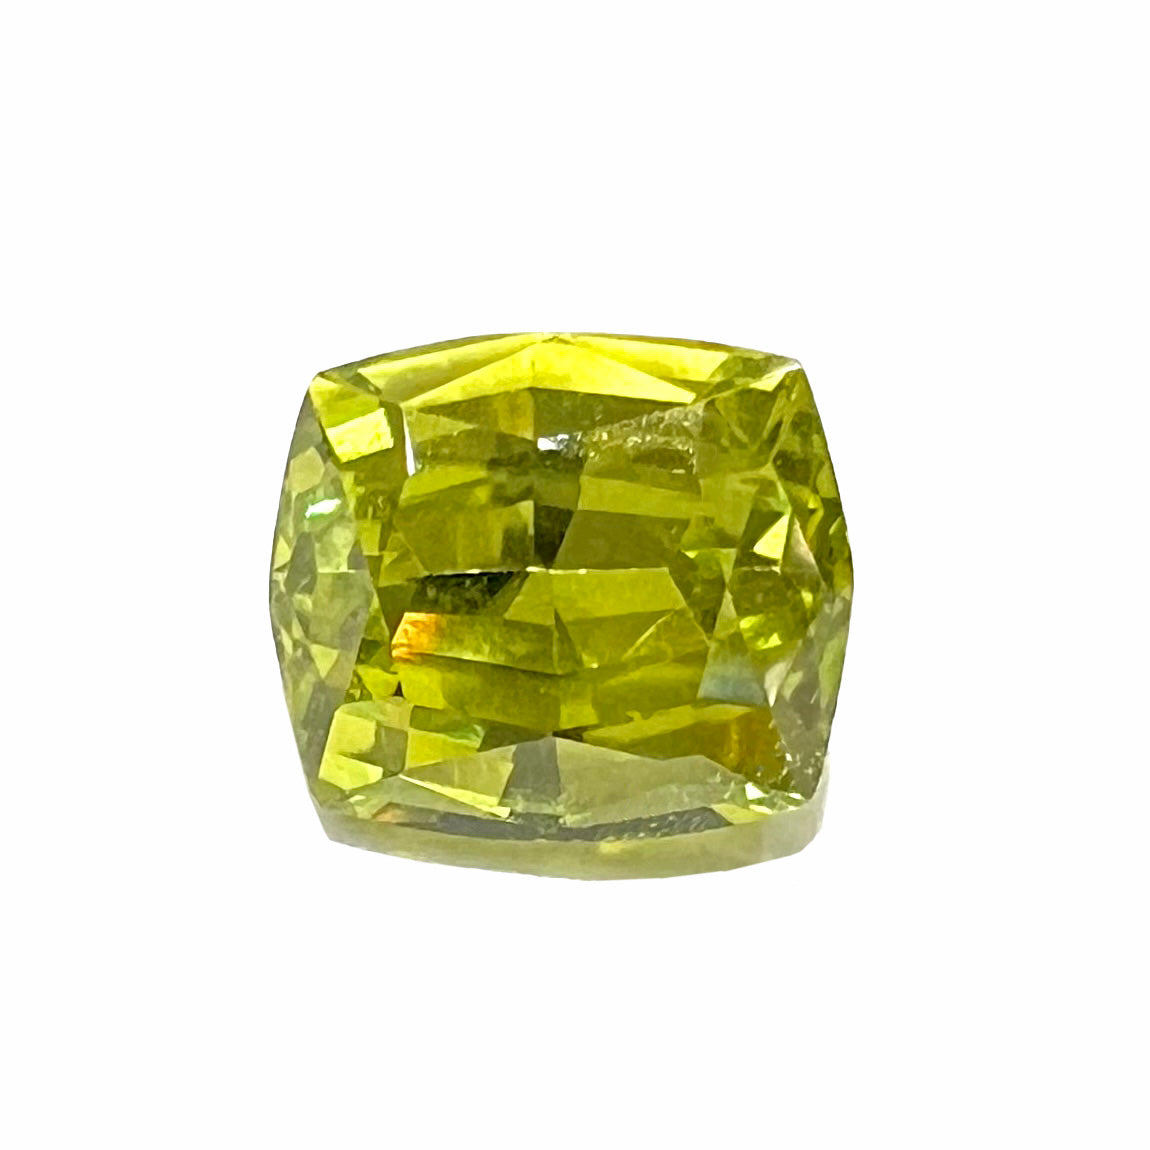 A loose, modified cushion cut greenish yellow chrysoberyl gemstone.